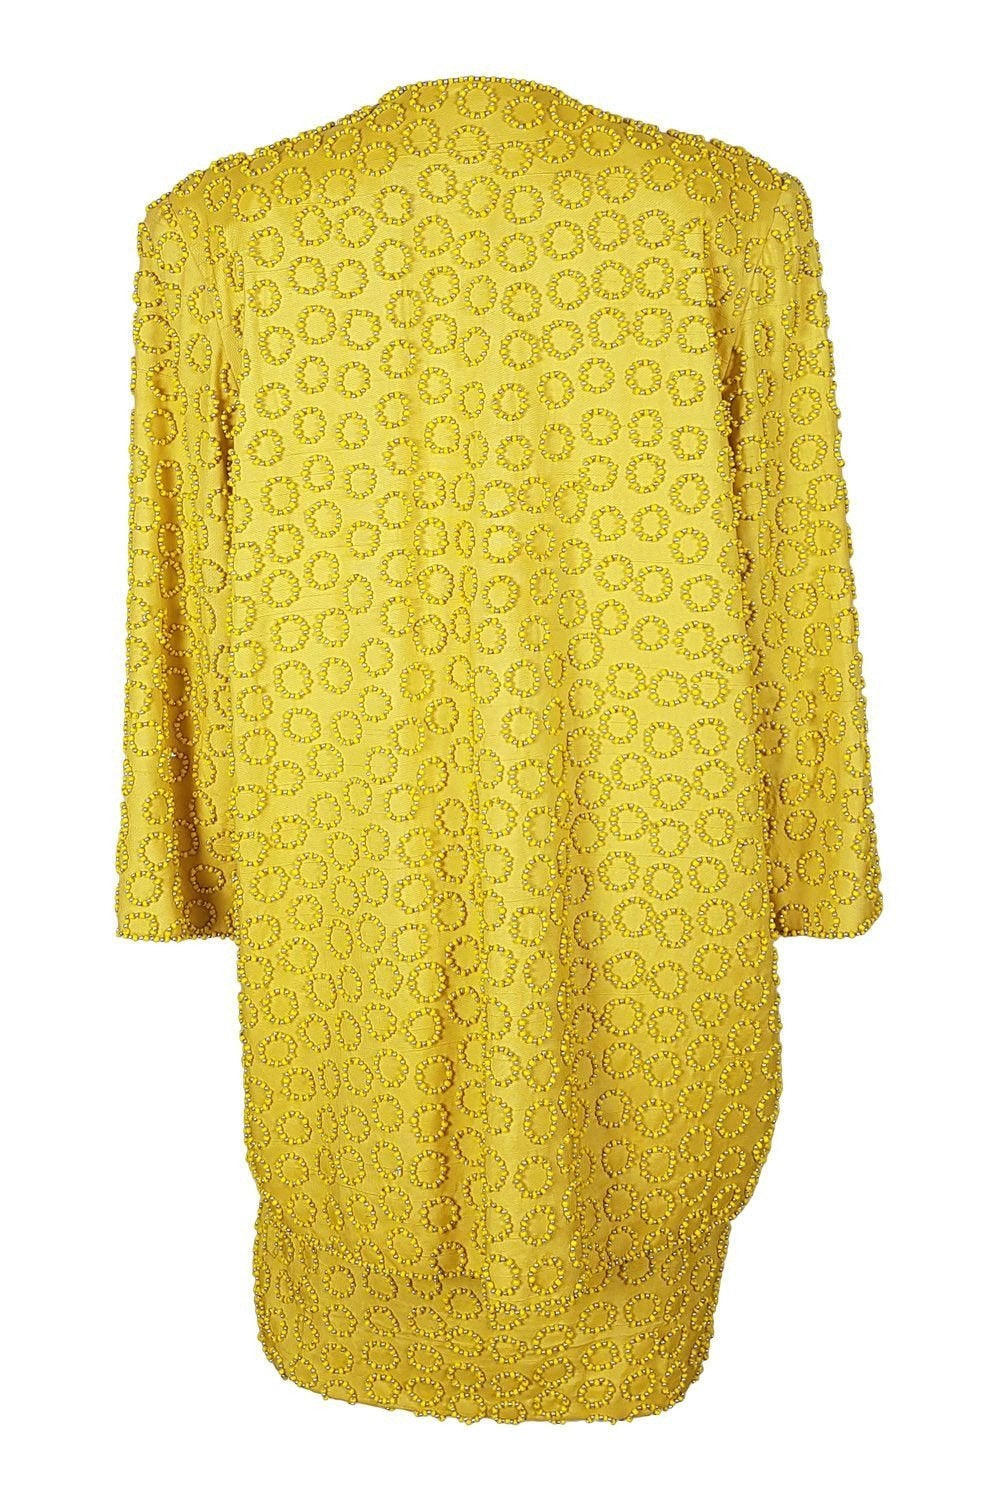 OLEG CASSINI Canary Yellow Silk Suit (s)-Oleg Cassini-The Freperie